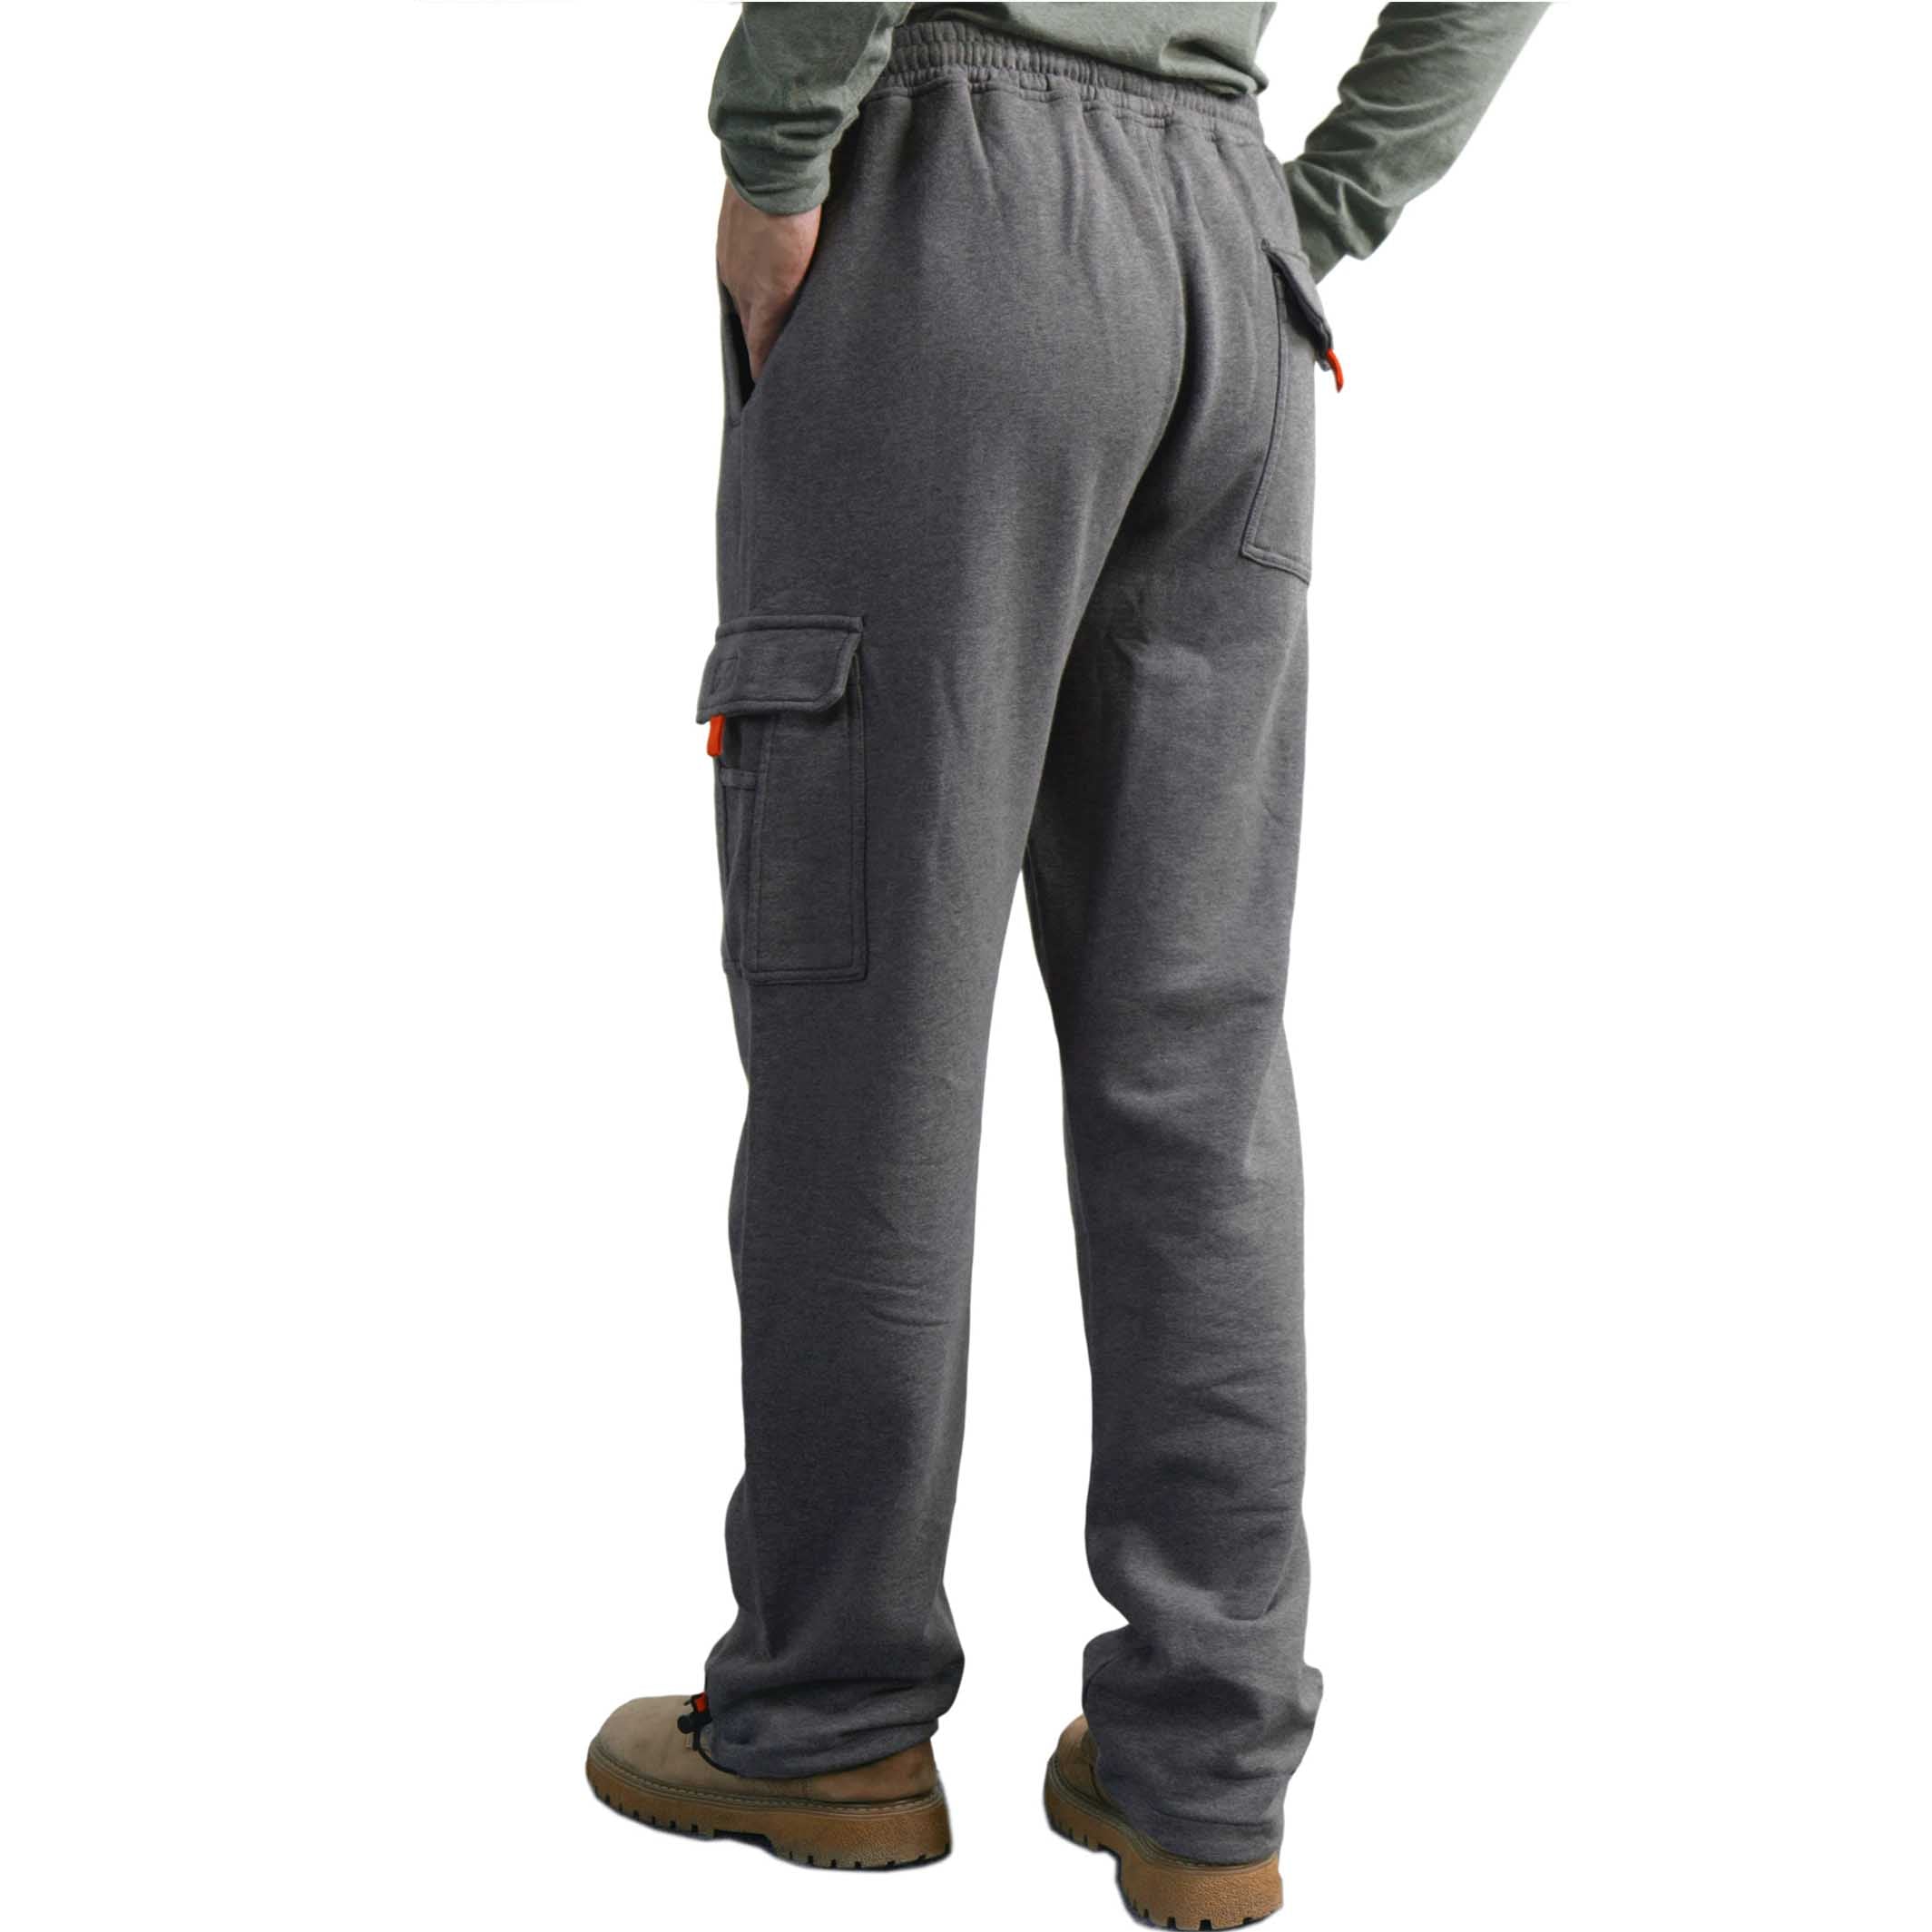 5021 BOCOMAL FR Cargo Pants(multiple Pockets) 7.5oz Lightweight Work Pants for Men,Rasco Carpenter Pants,CAT 2 NFPA2112 Certified Field Pants,Cotton FR